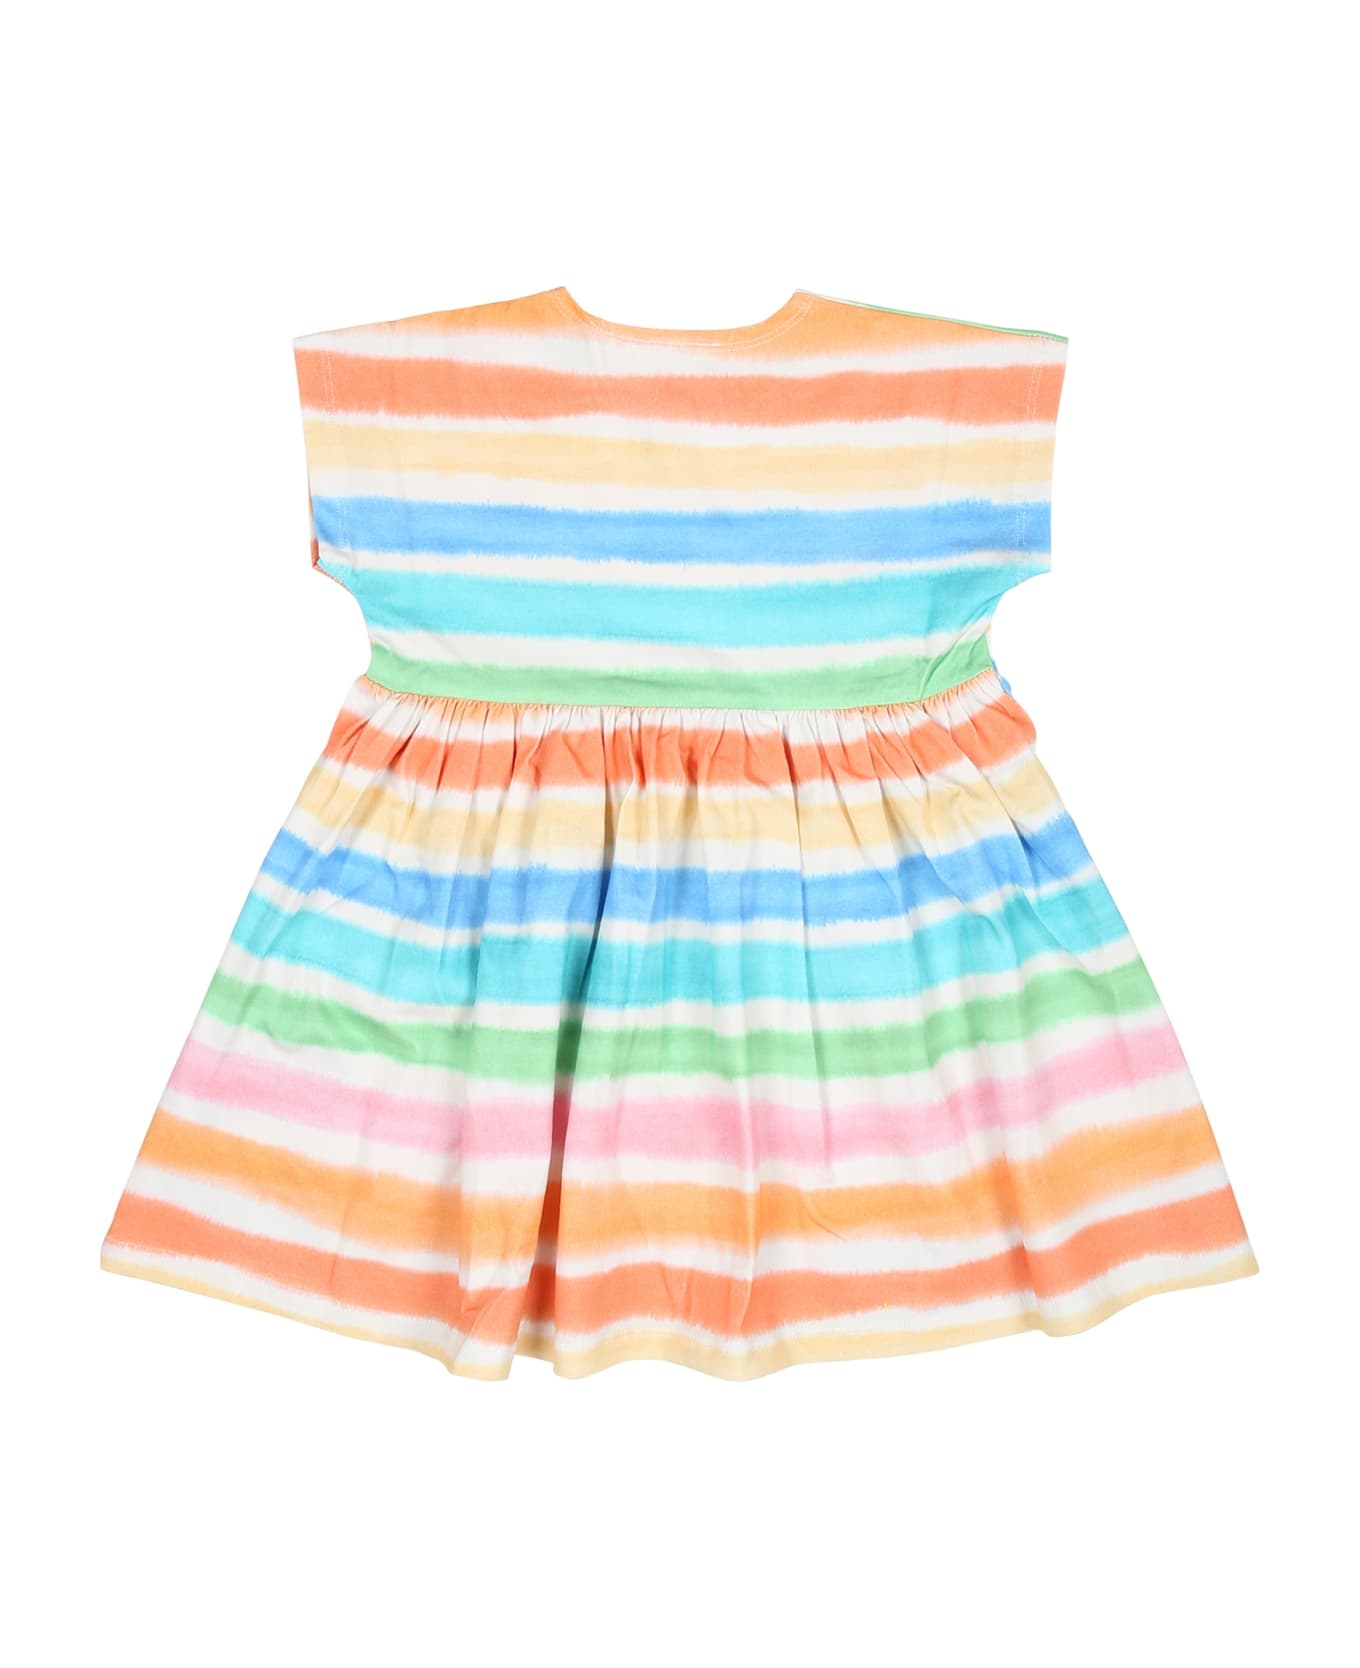 Molo Multicolor Casual Dress For Baby Girl - Multicolor ウェア